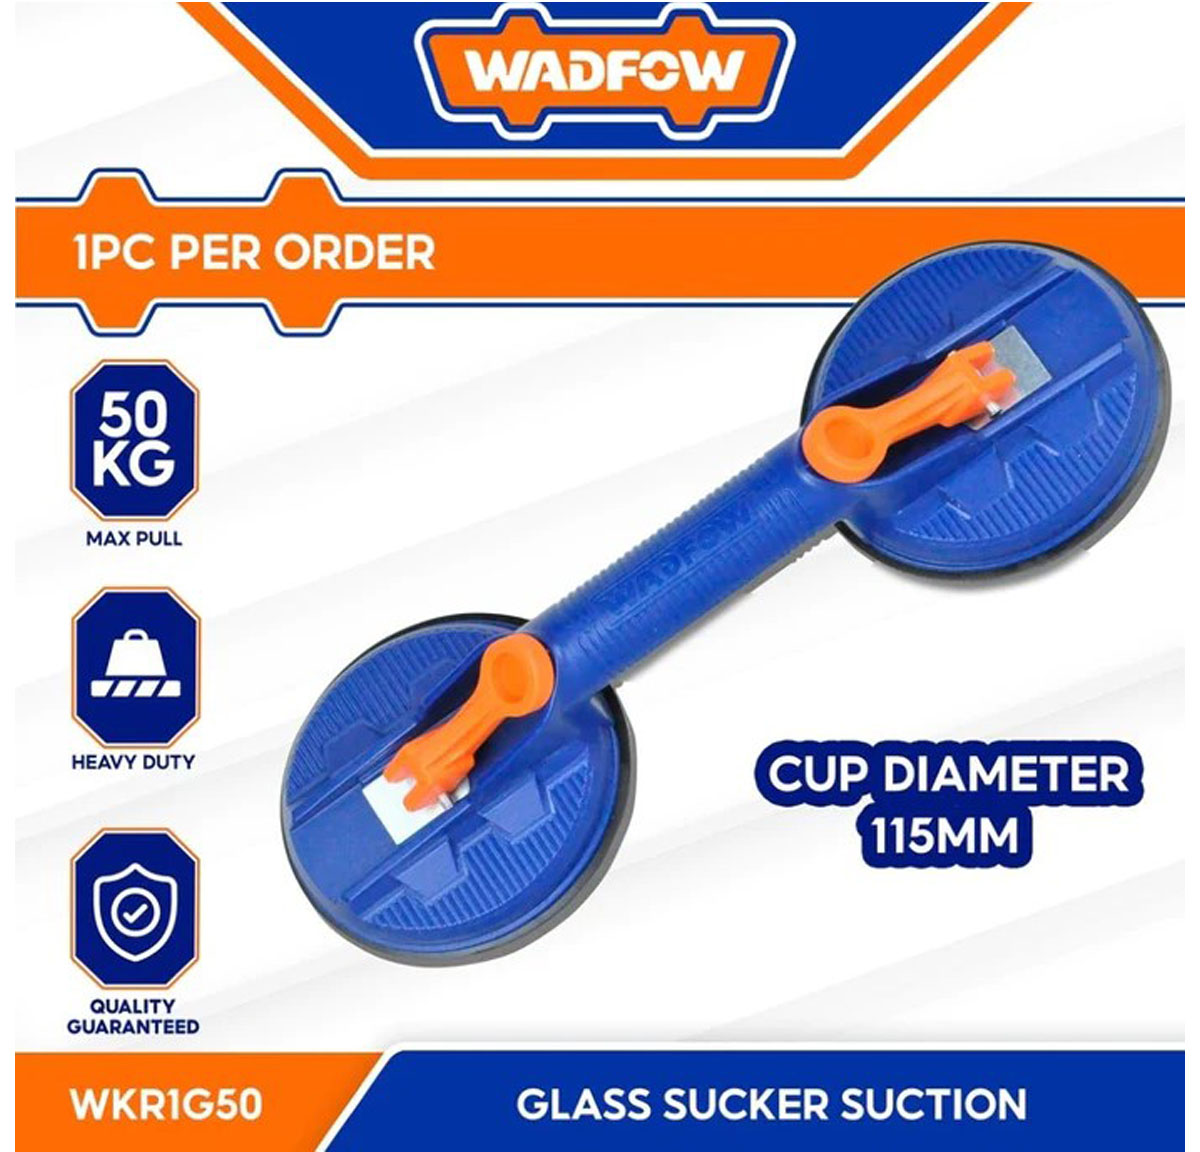 SUCKER 50kg WKR1G50 | Company: Wadfow | Origin: China